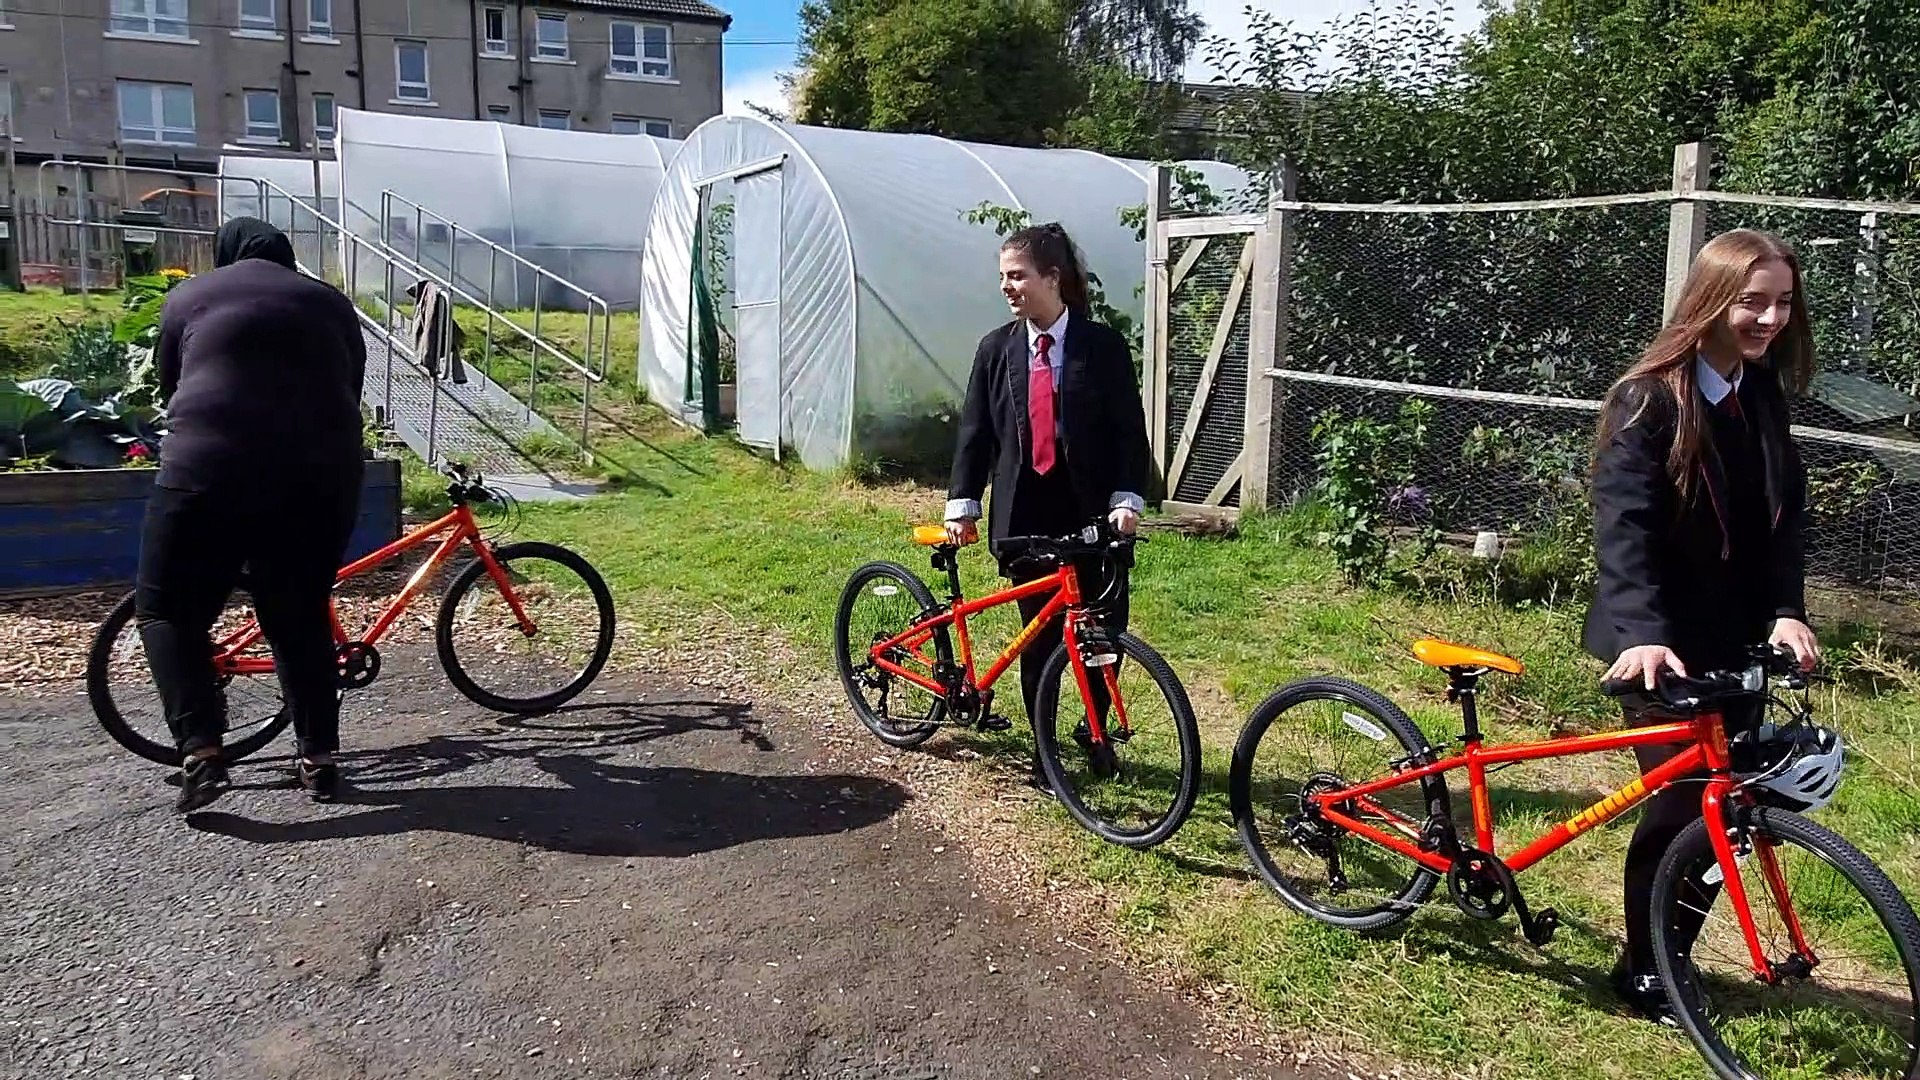 Free bikes for school aged children in Glasgow - video Dailymotion